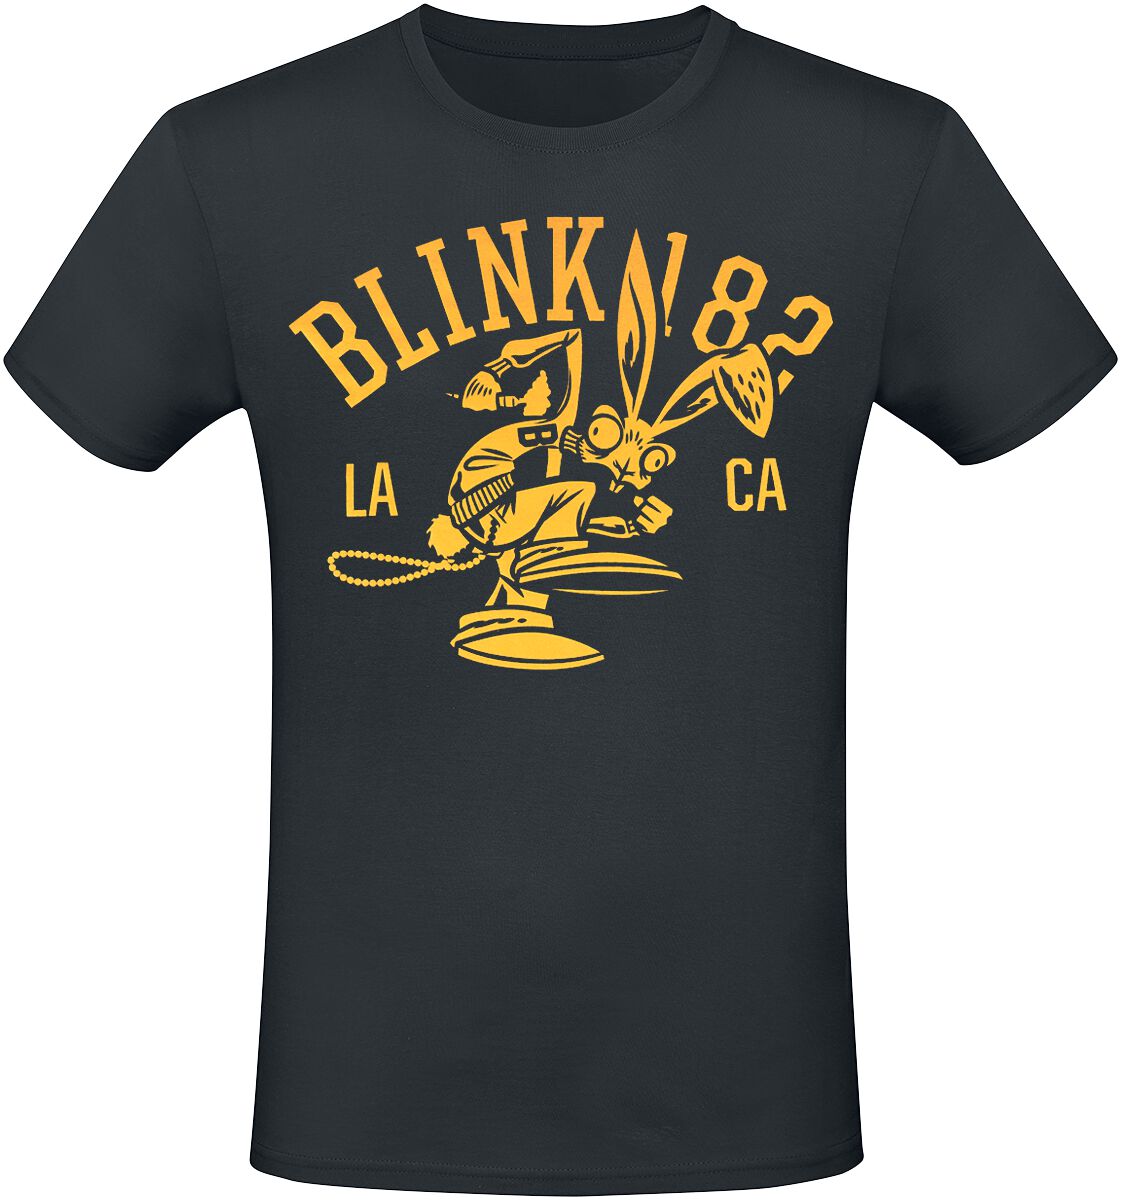 Blink-182 Mascot T-Shirt schwarz in L